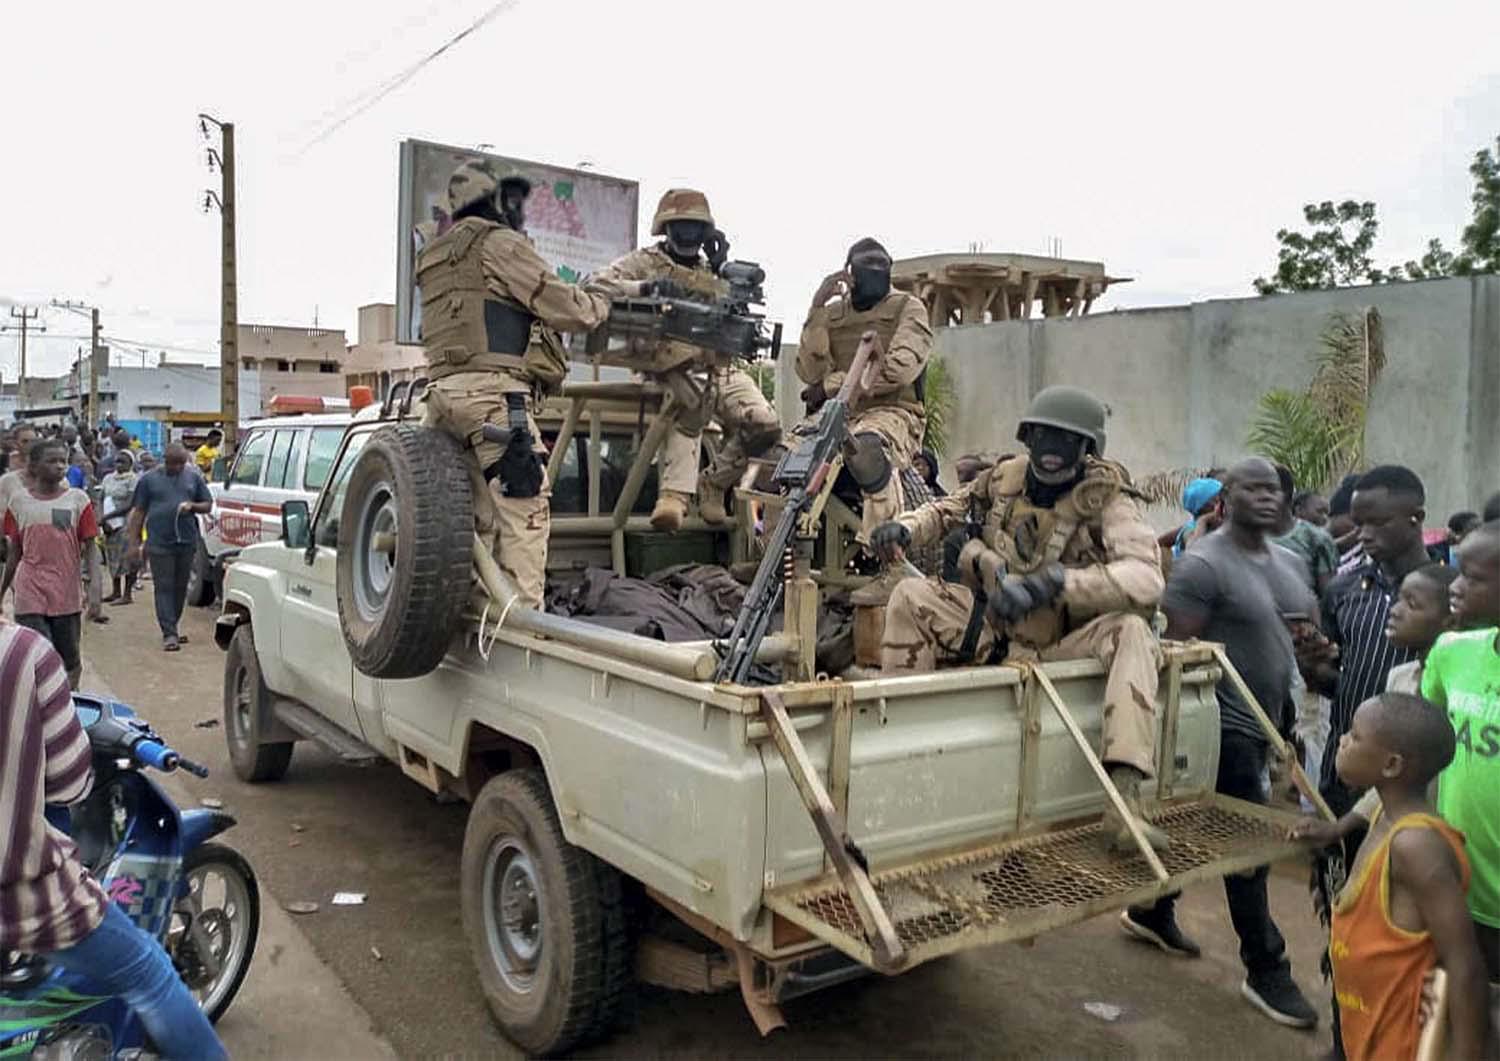 Mutinying soldiers detained Keita at gunpoint